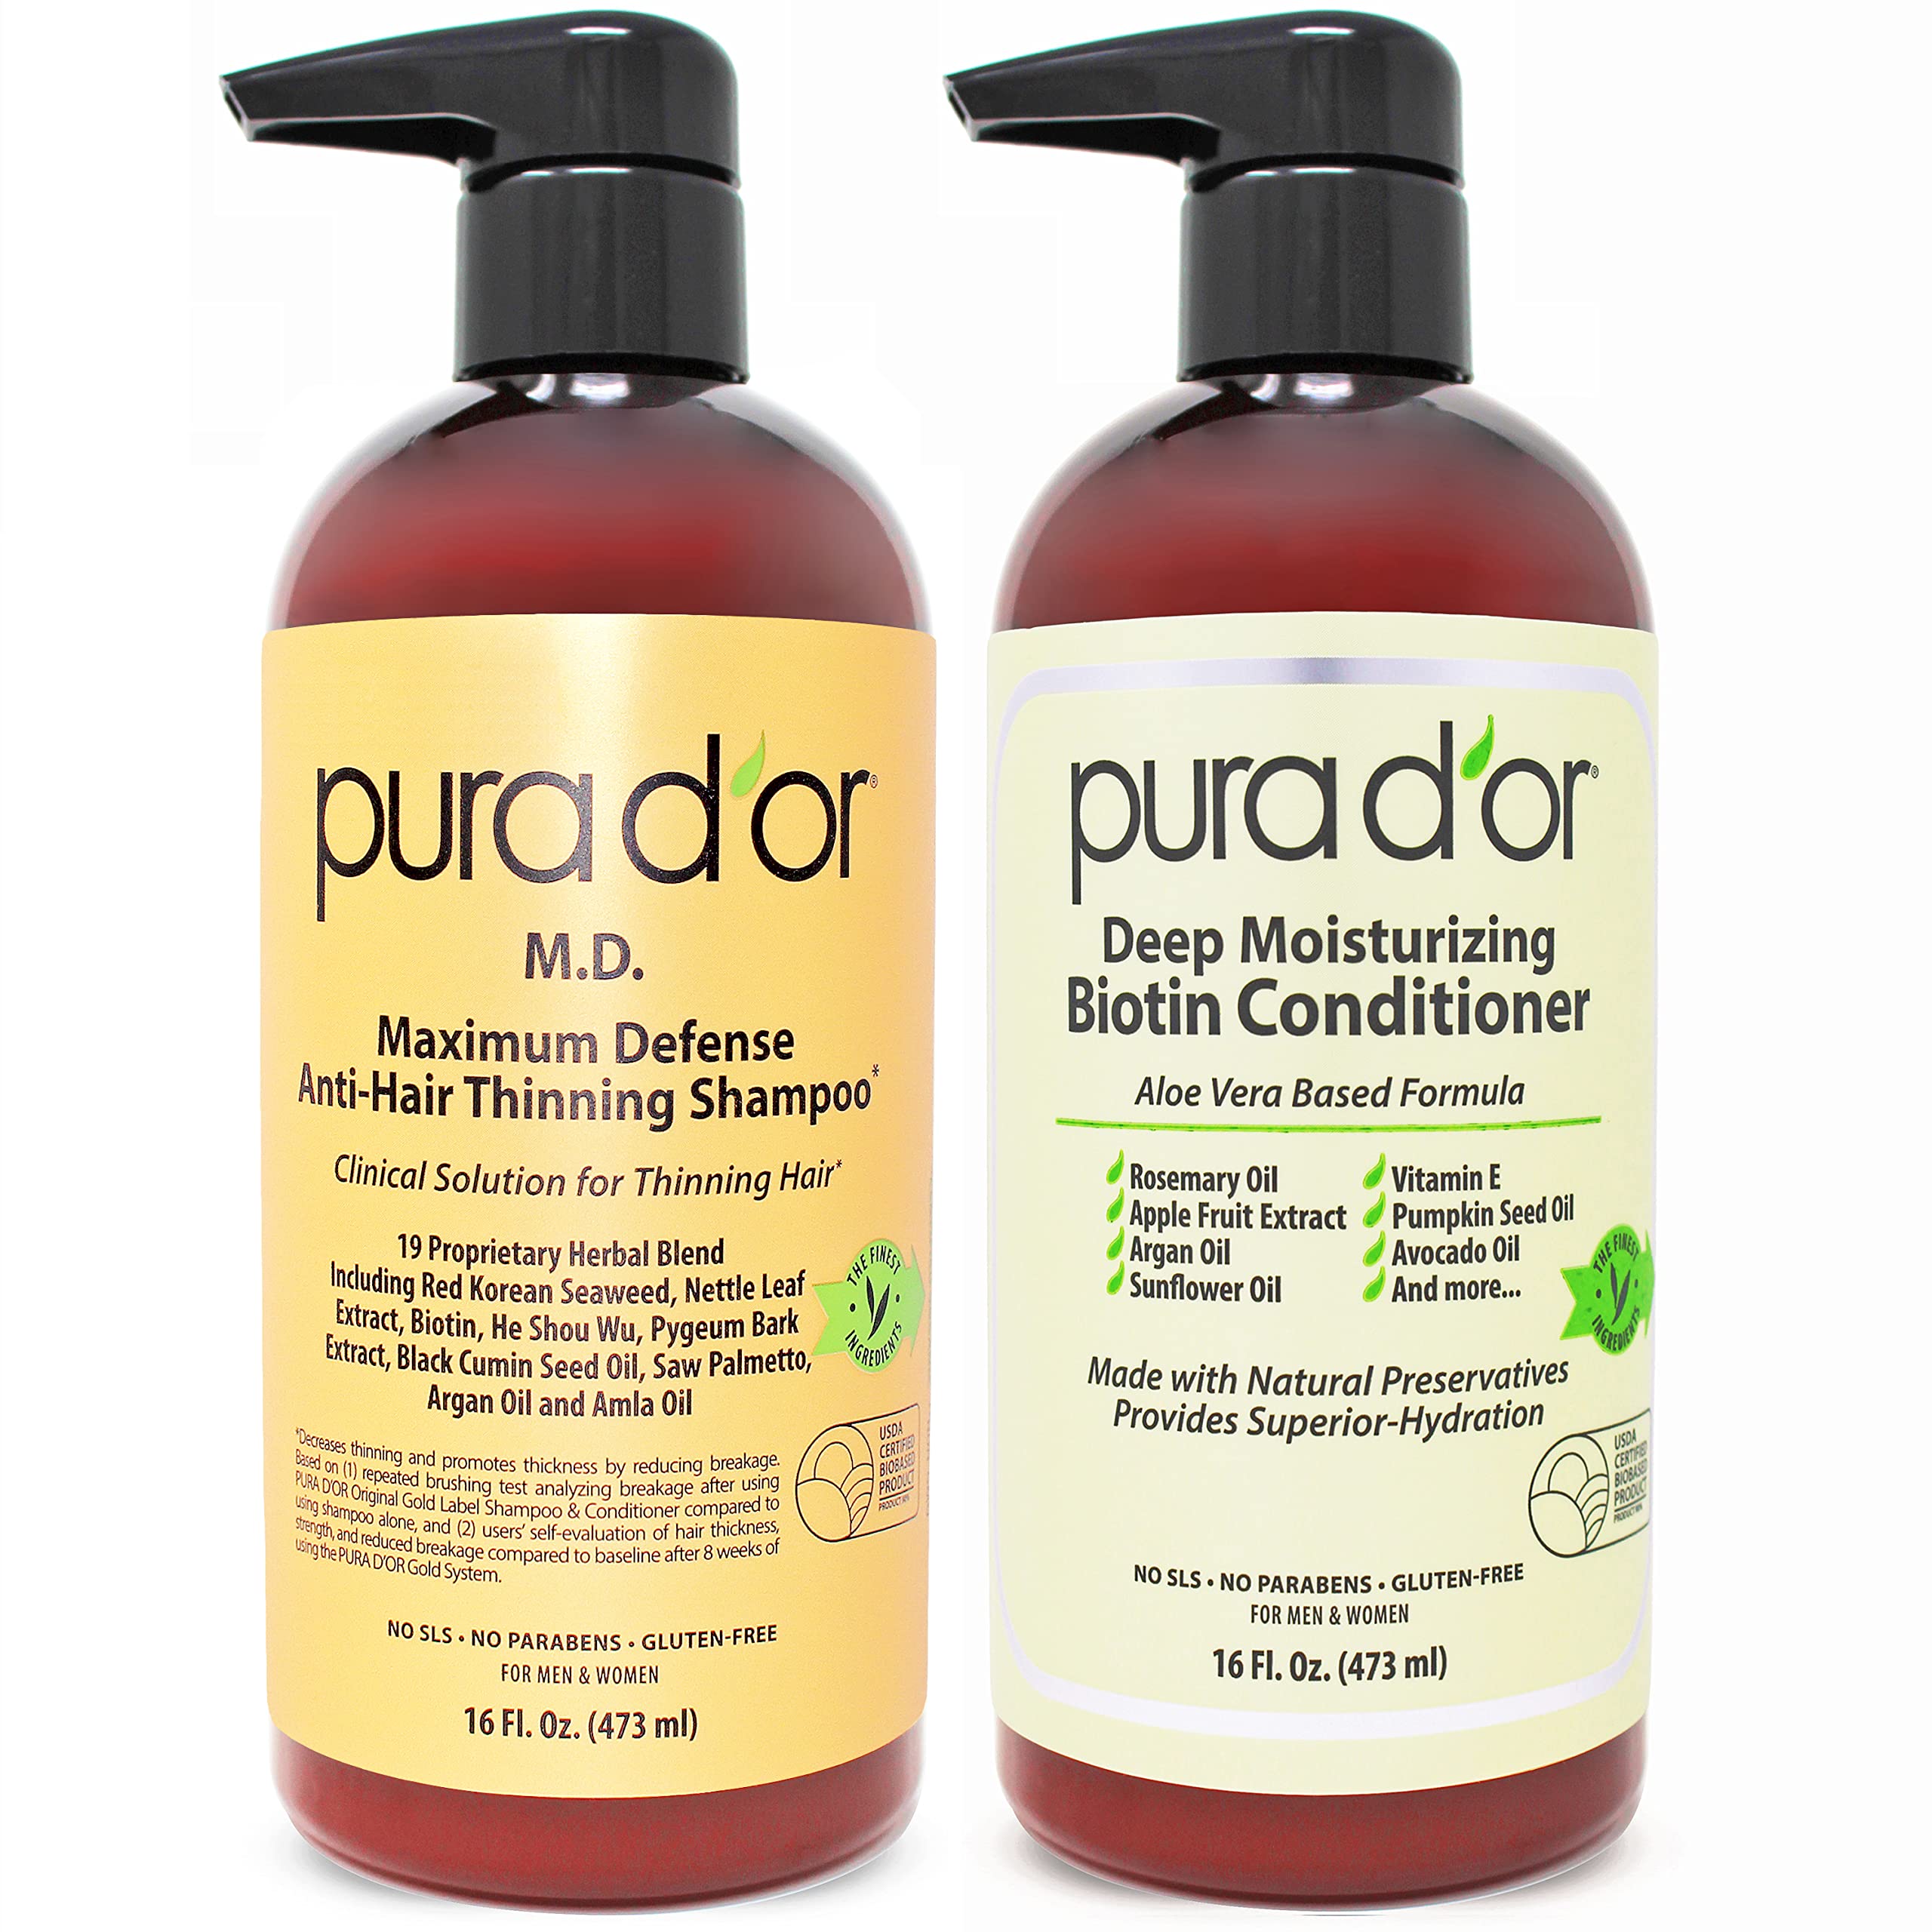 PURA D'OR Dor Advanced Therapy System Shampoo & Conditioner Reduce